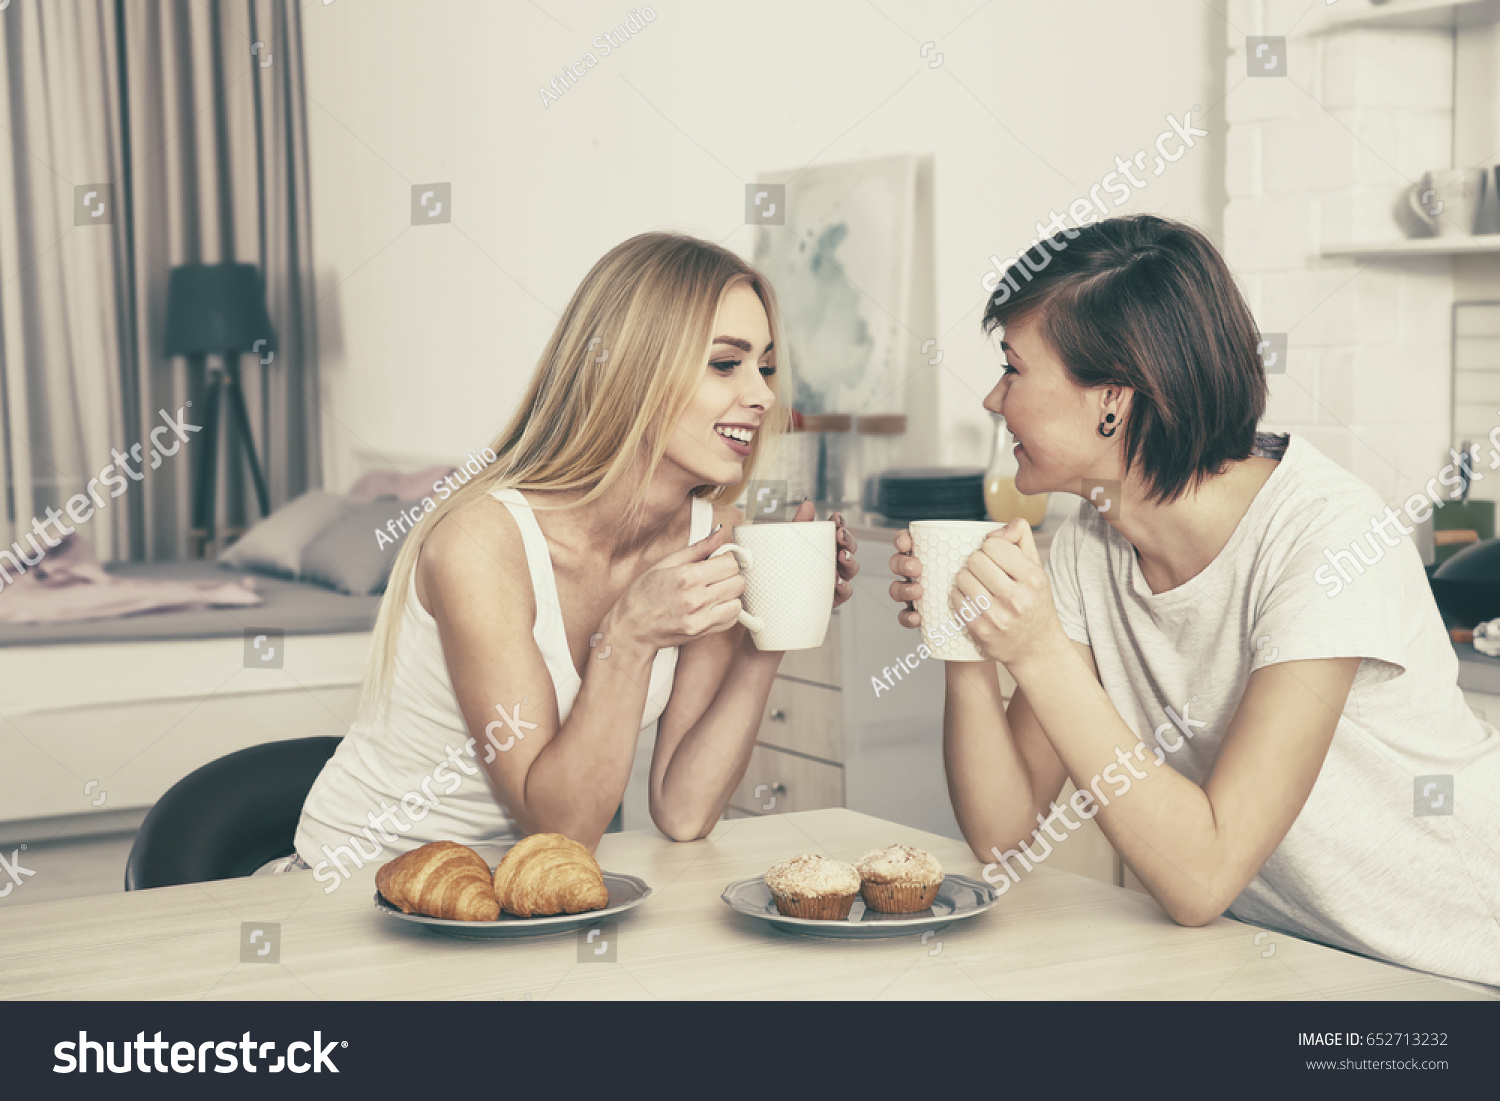 Lesbians On Table